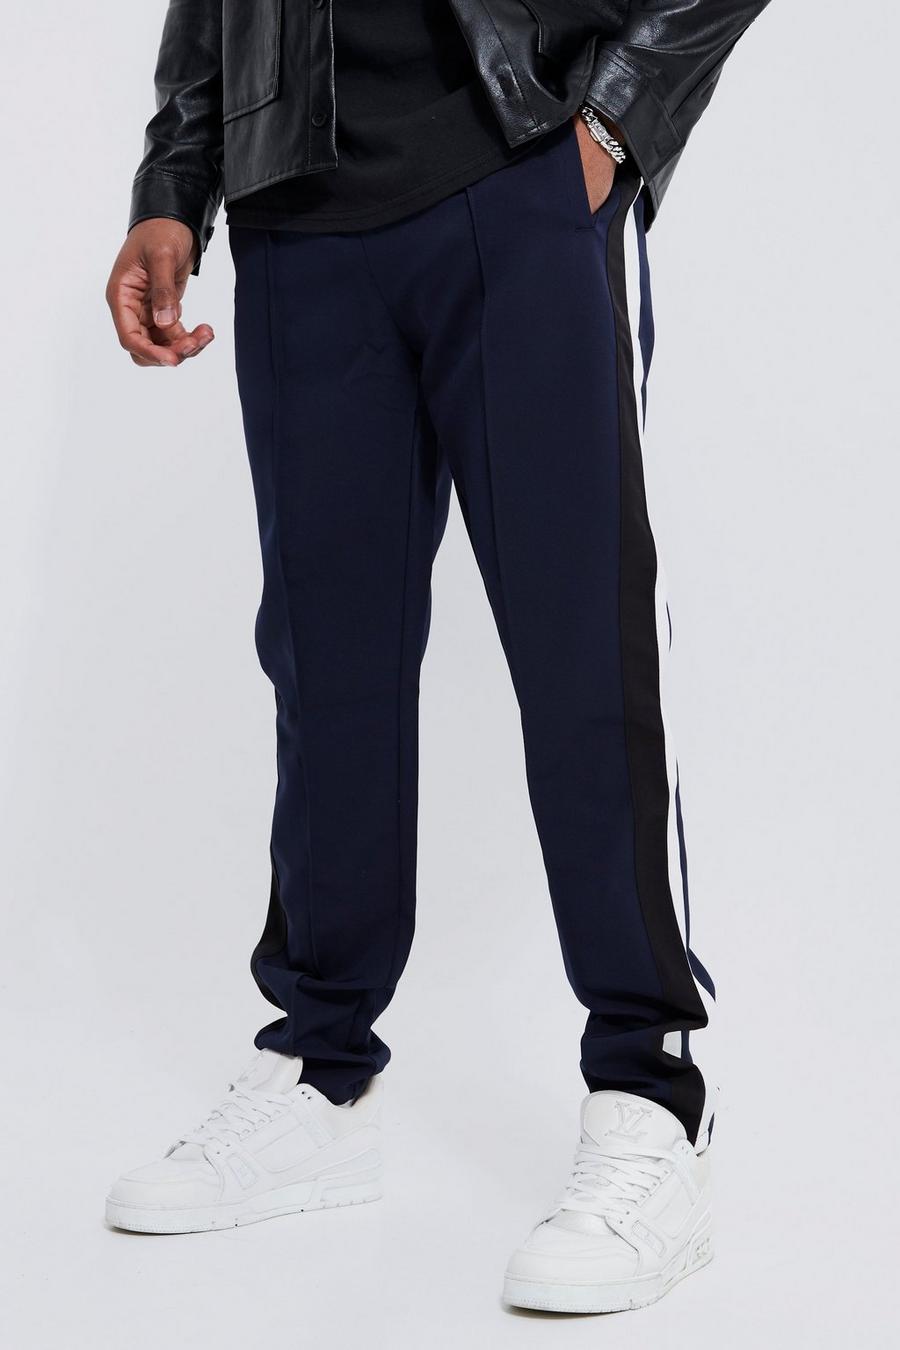 Pantaloni sartoriali Tall stile college, Navy